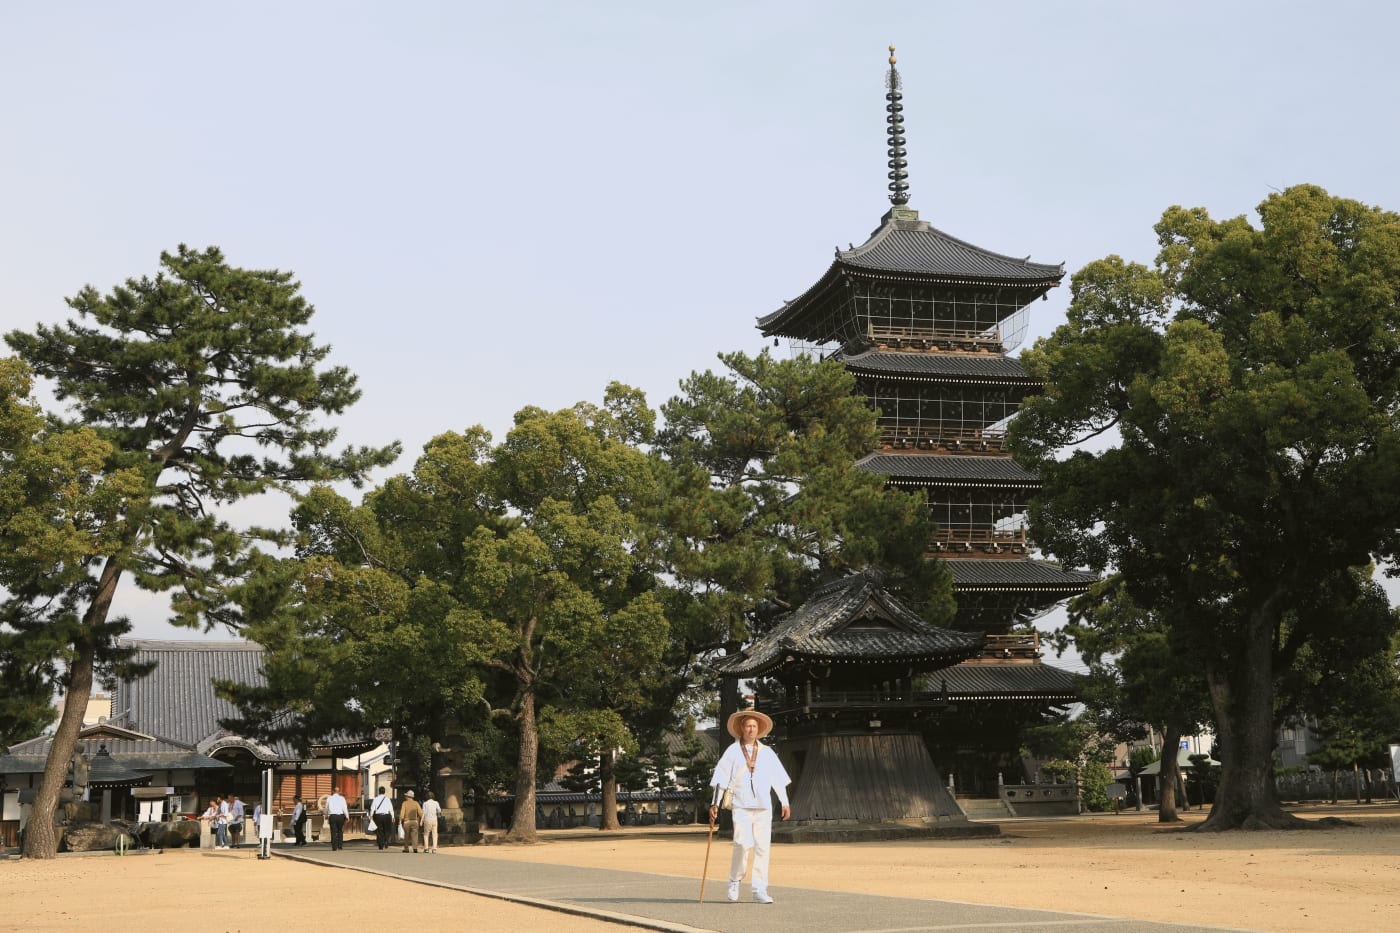 Association of the Shikoku Pilgrimage Temples